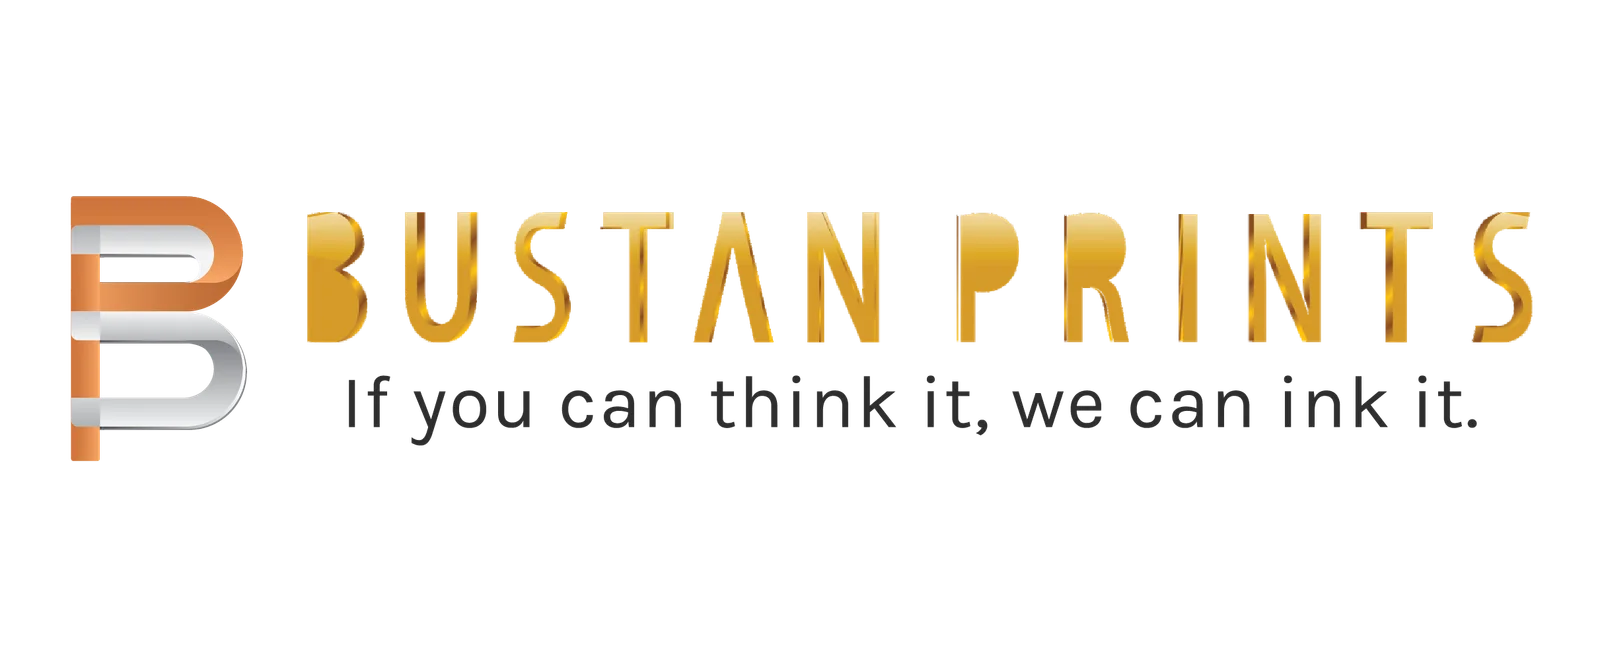 Bustan New website